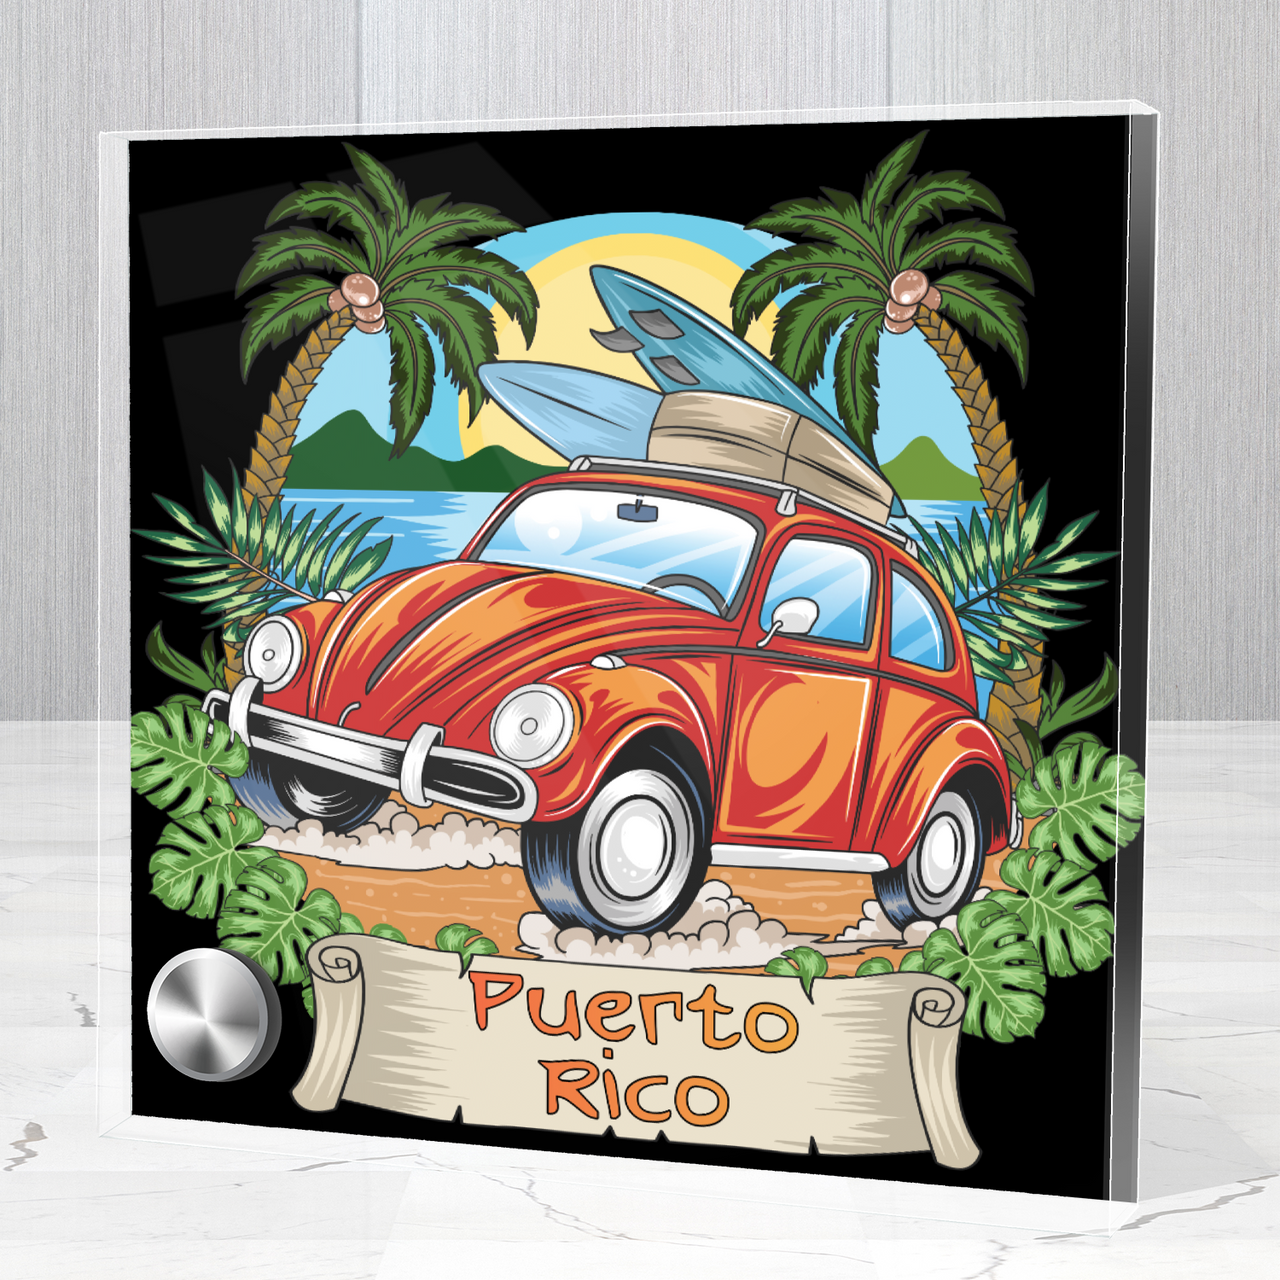 Puerto Rico Beach VW Scene Lumenglass Stand 3.5" x 3.5"